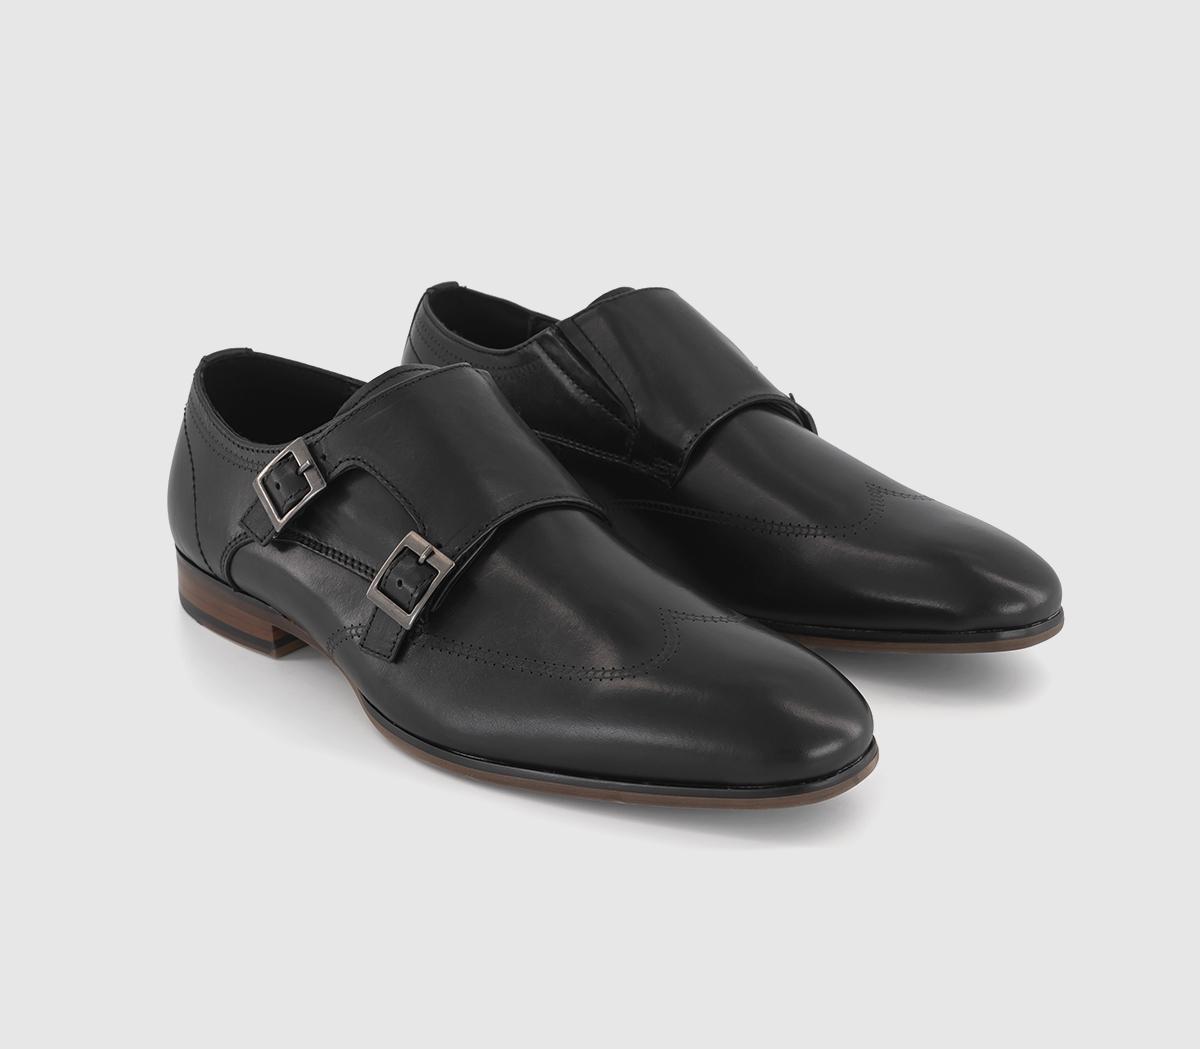 OFFICE Marseille Leather Double Strap Monk Shoes Black Leather - Men’s ...